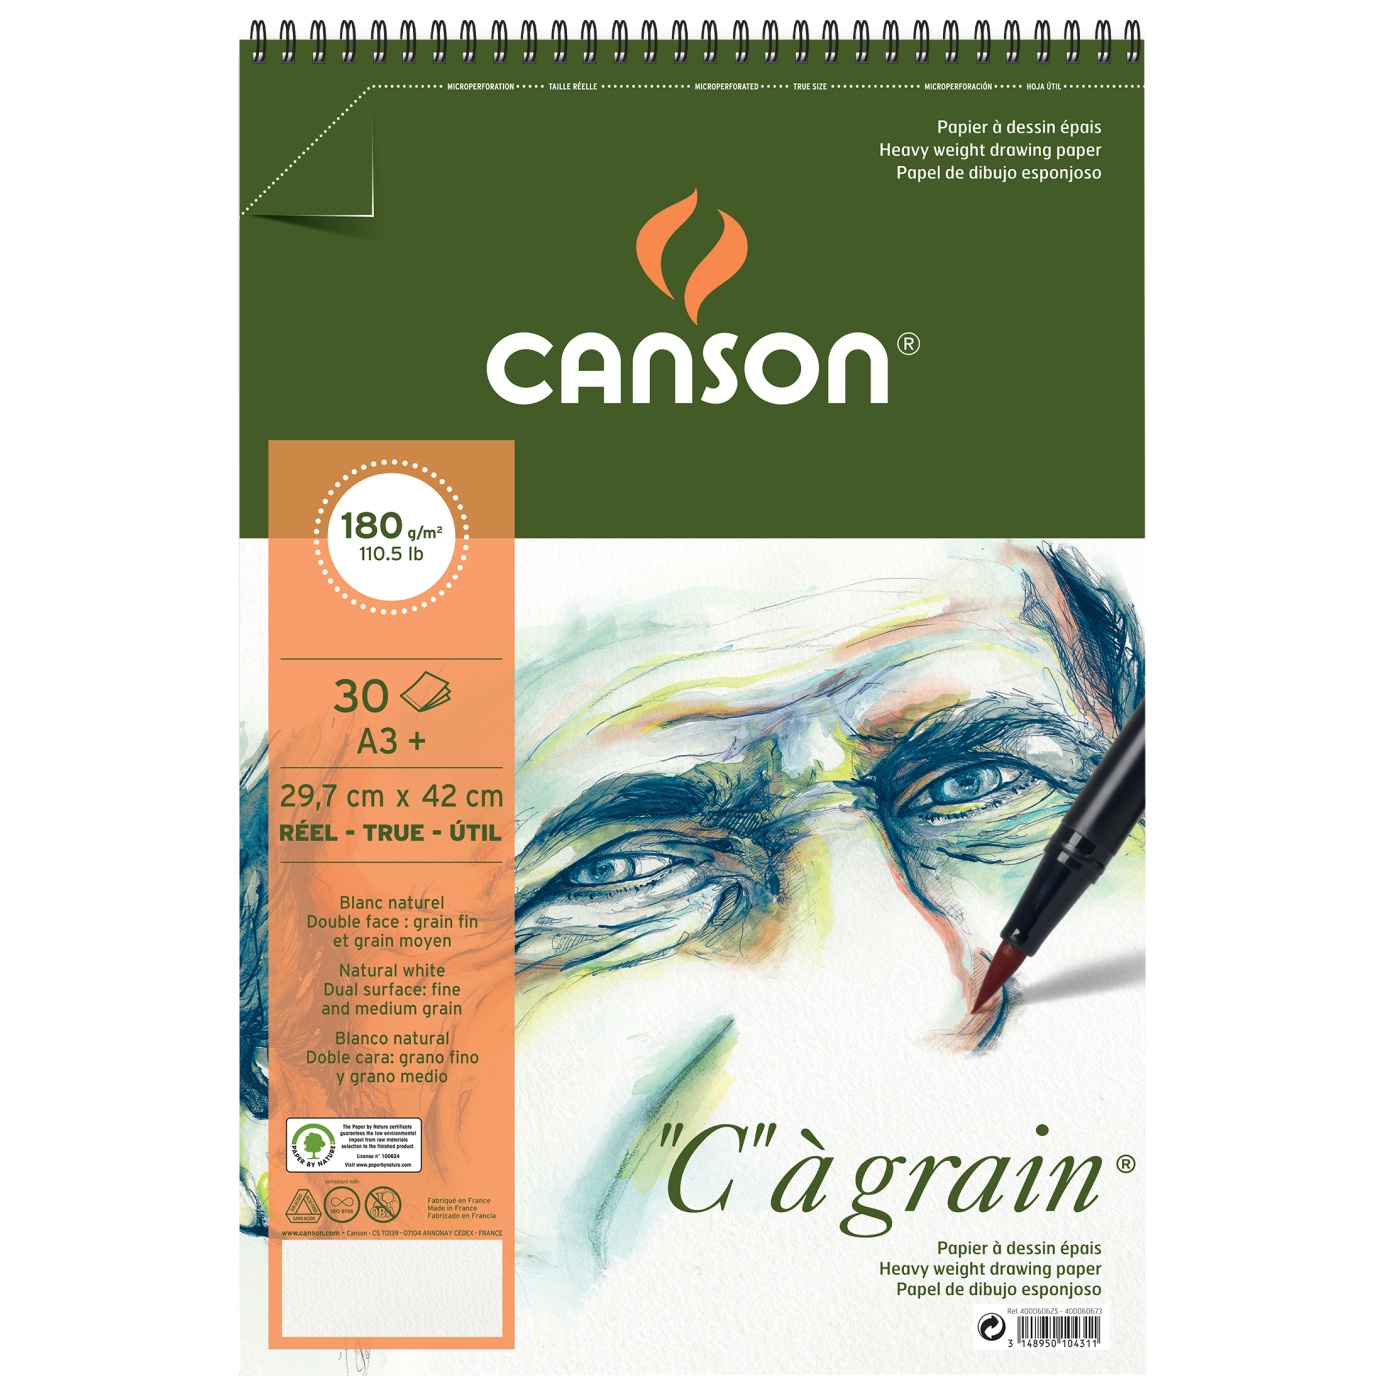 Canson XL Watercolor Pad, 30 Sheets, 7 x 10